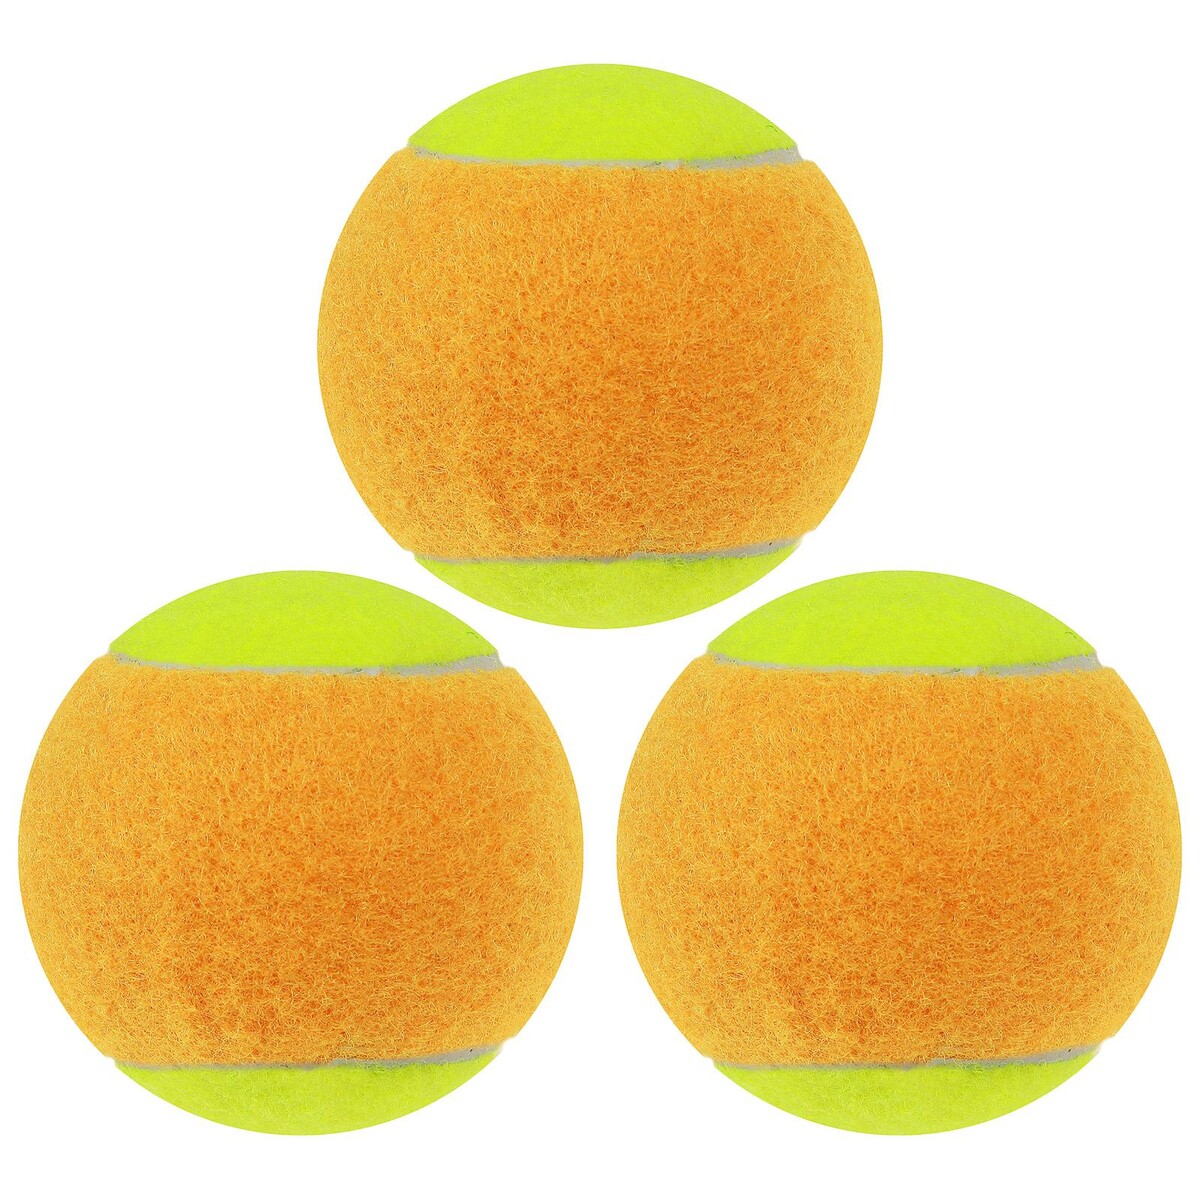 Набор мячей для большого тенниса onlytop swidon, 3 шт. набор мячей для настольного тенниса boshika d 40 мм 3 звезды 6 шт оранжевый